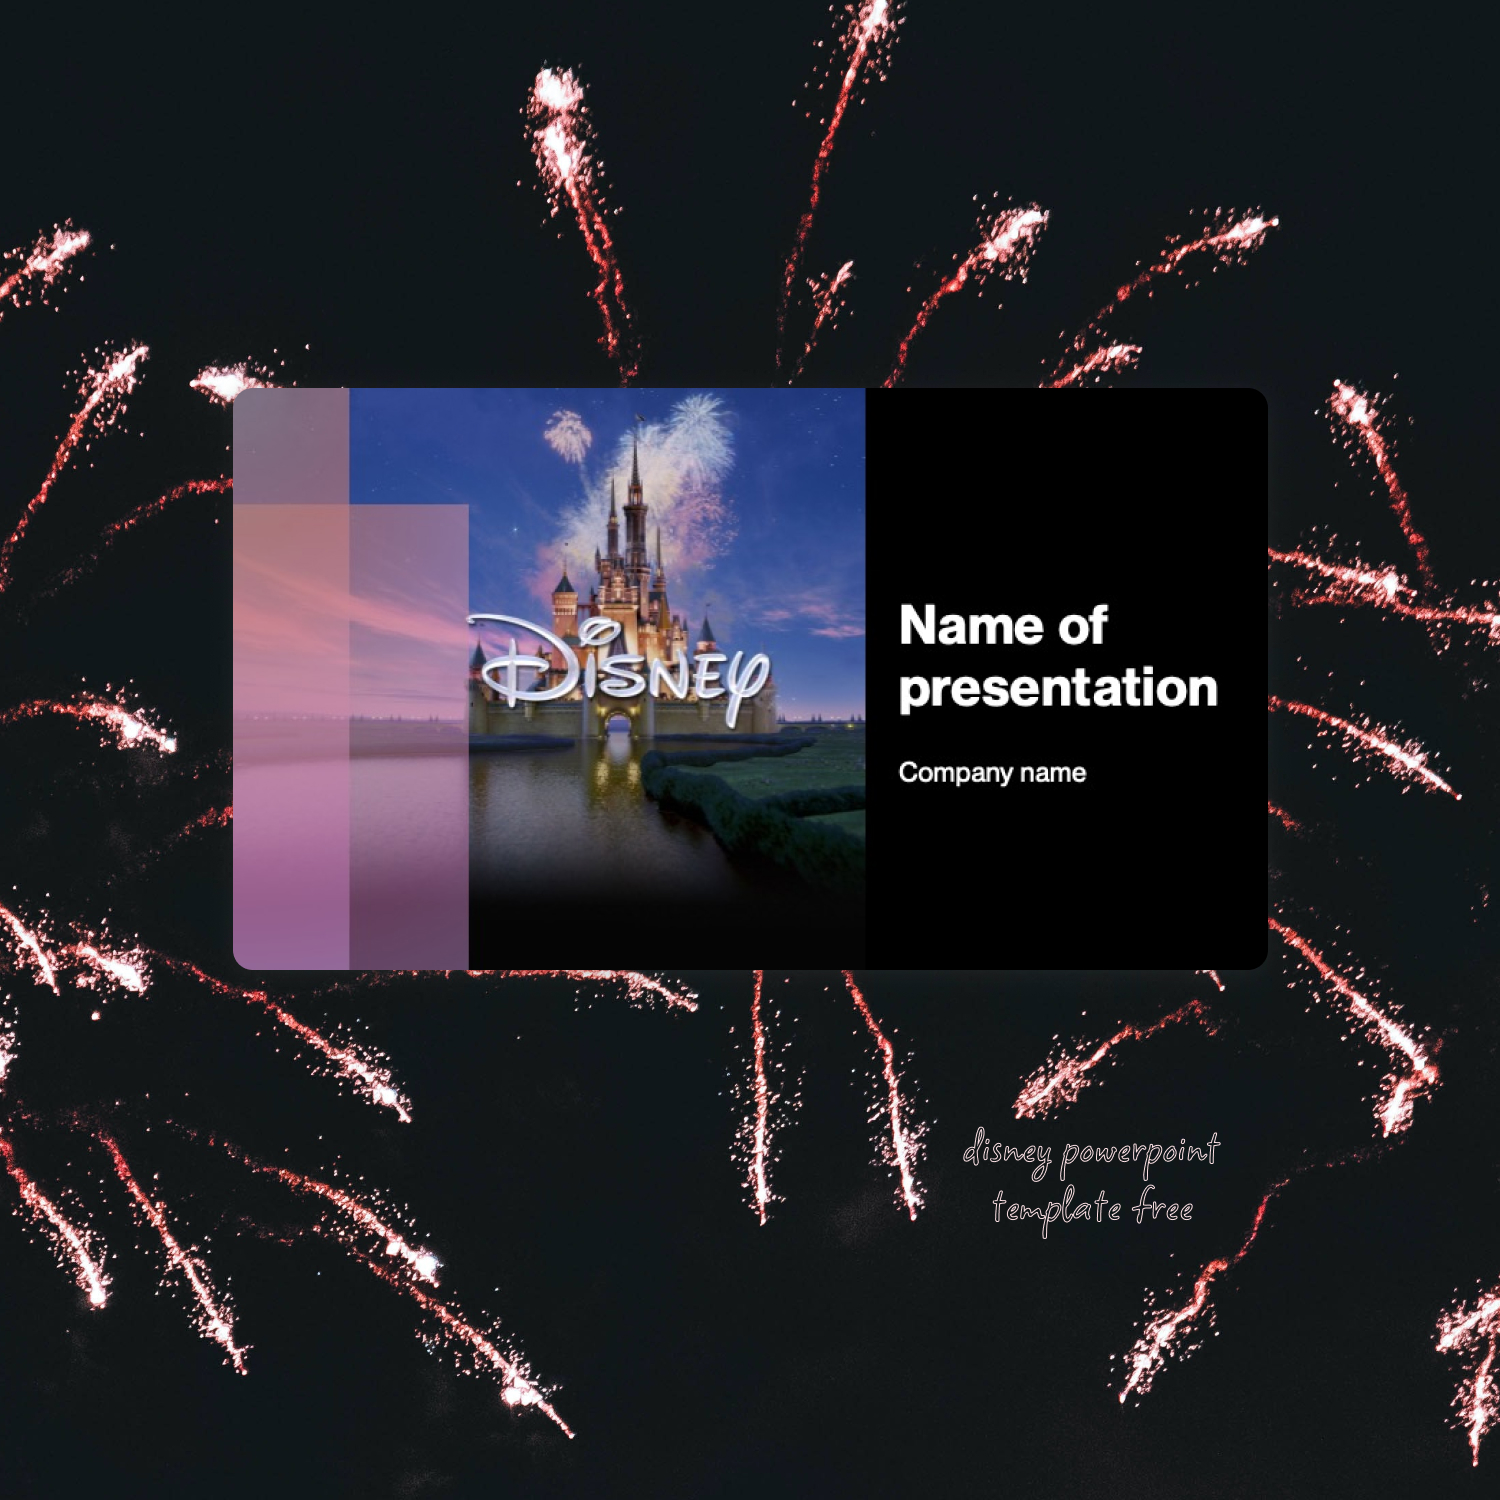 Disney Powerpoint Template Free.